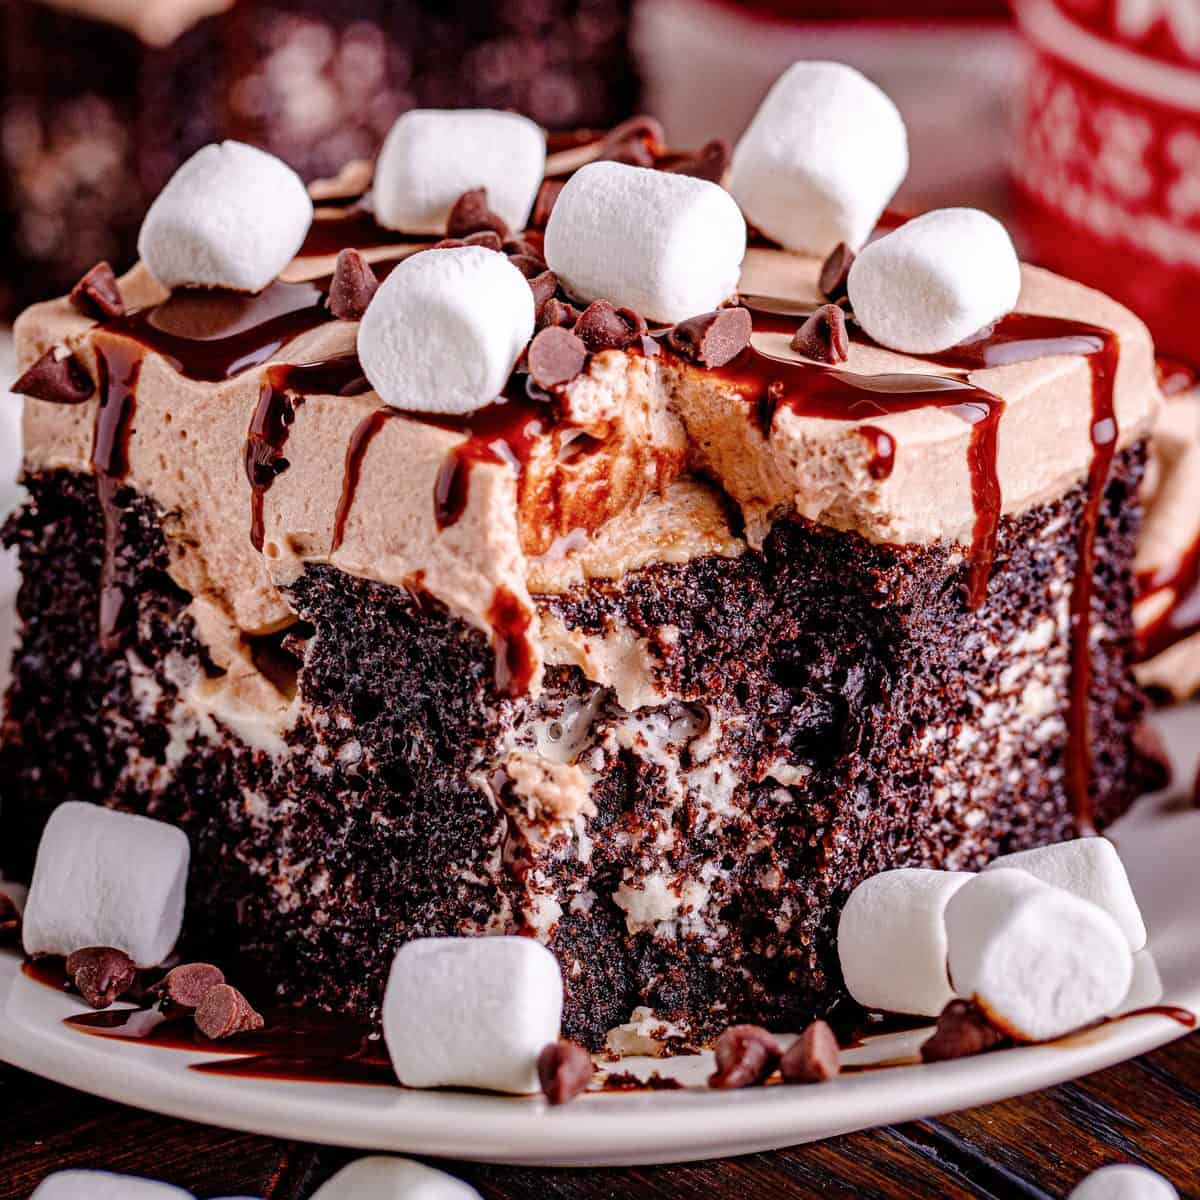 Hot Chocolate Poke Cake